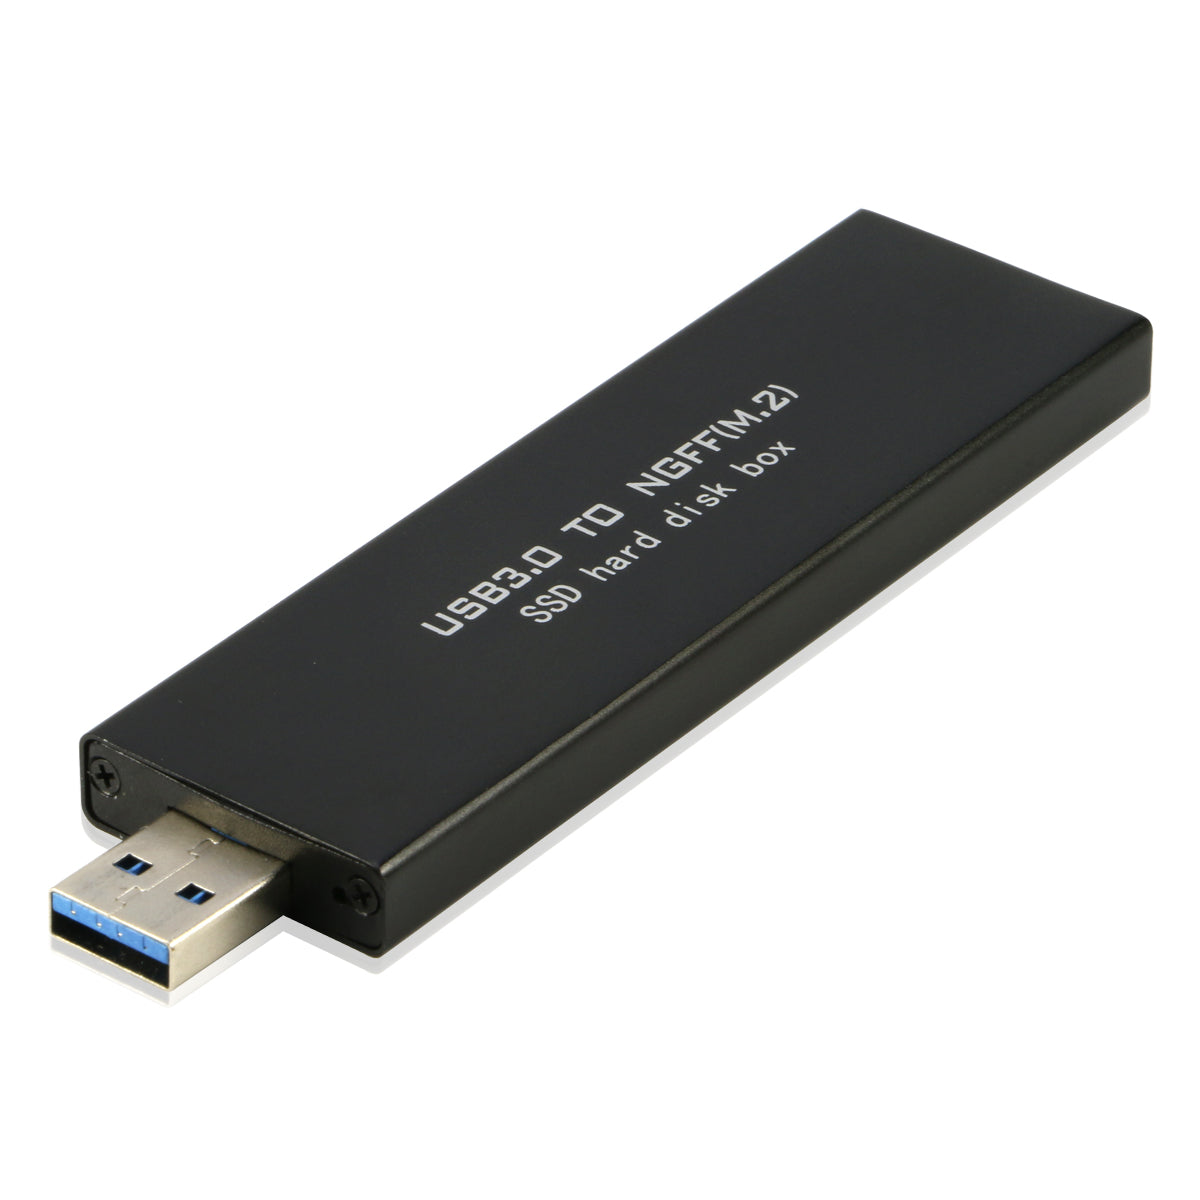 Achetez USB 3.0 à 2242 / 2230 NVME M-key M.2 NGFF SATA SSD